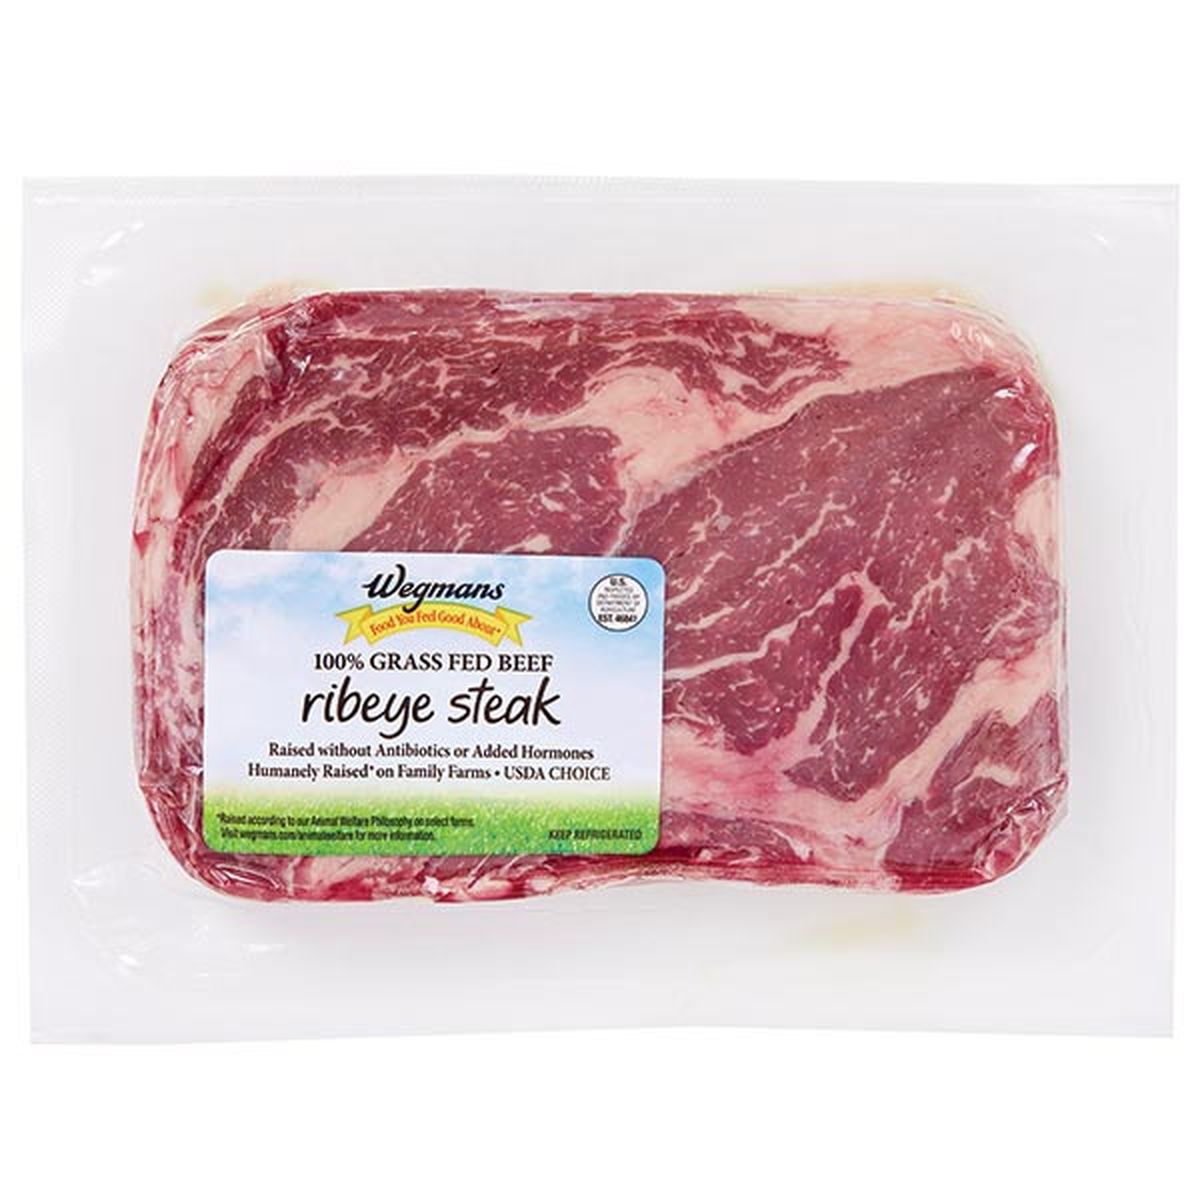 Calories in Wegmans 100% Grass Fed Angus Beef Ribeye Steak